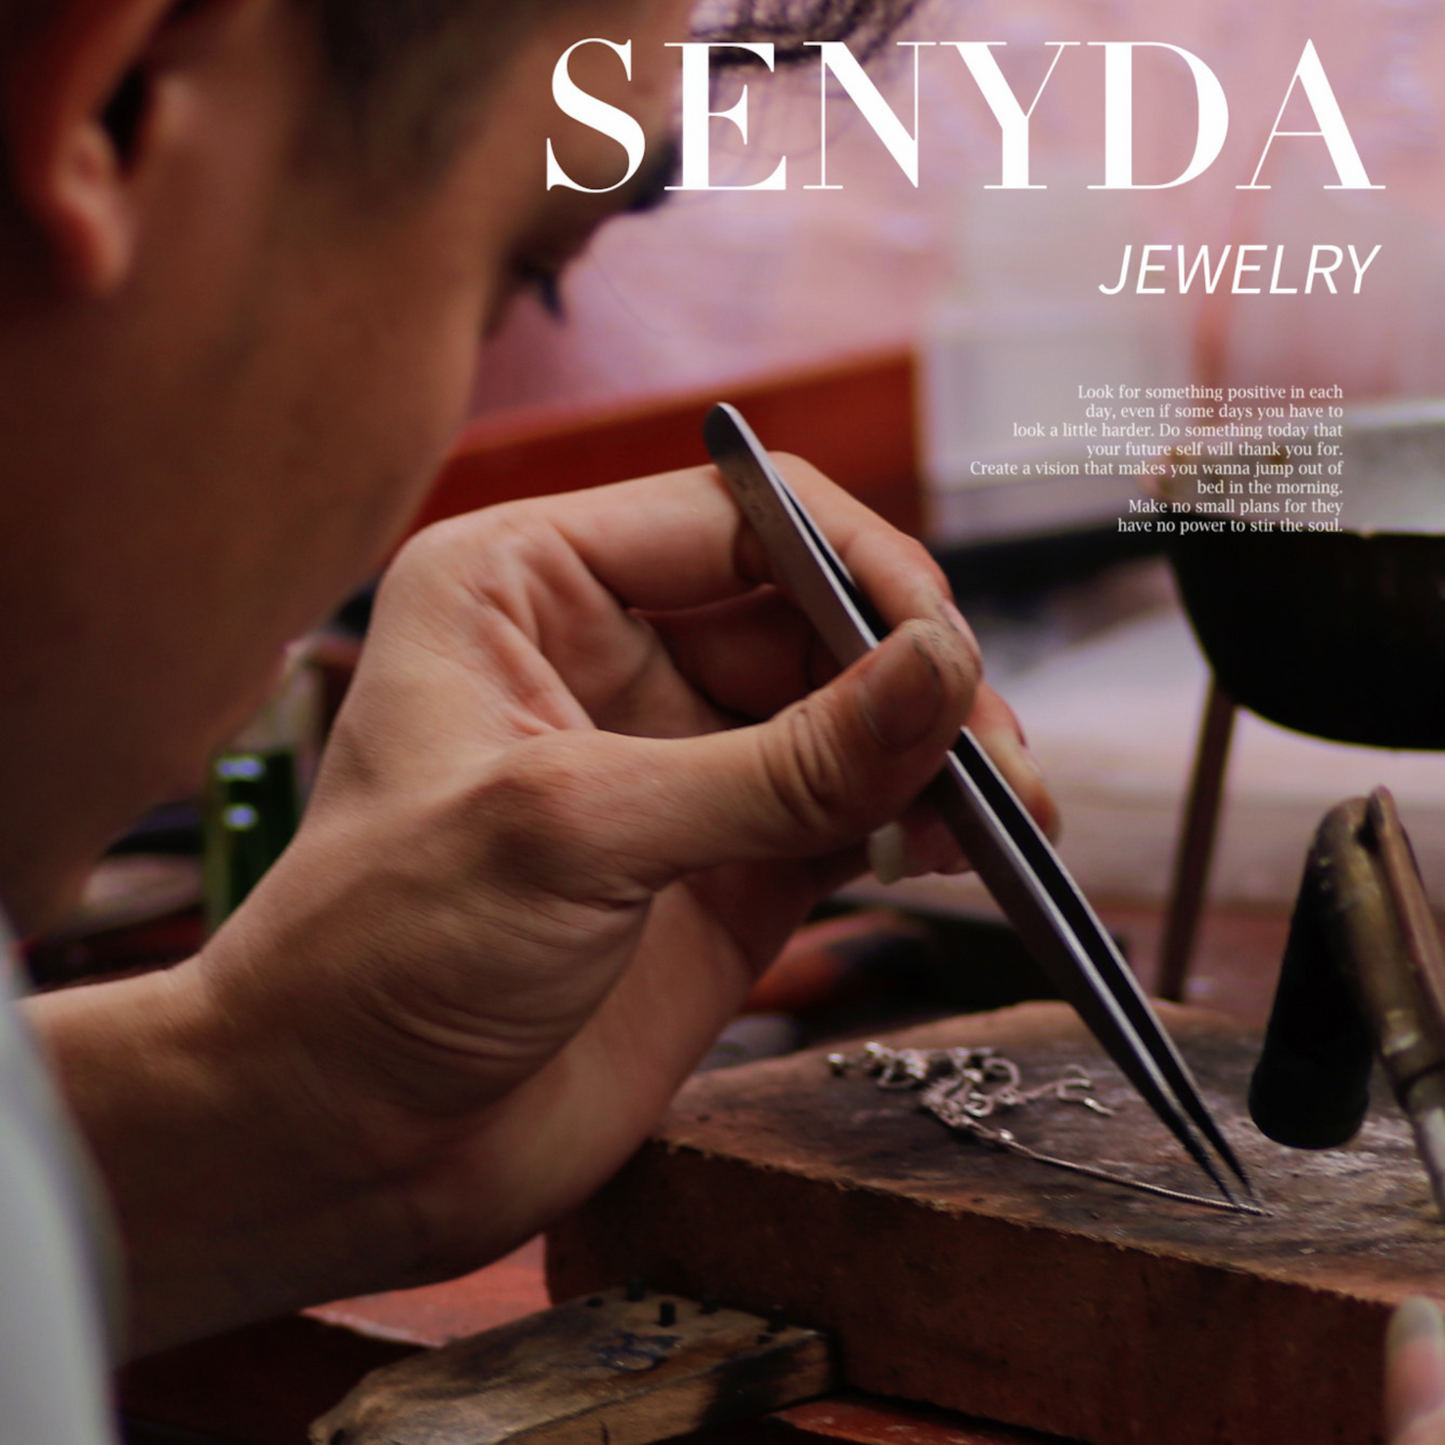 Senyda 15K Solid Gold Round - Shaped Brilliant Cut Cubic Zirconia Ring